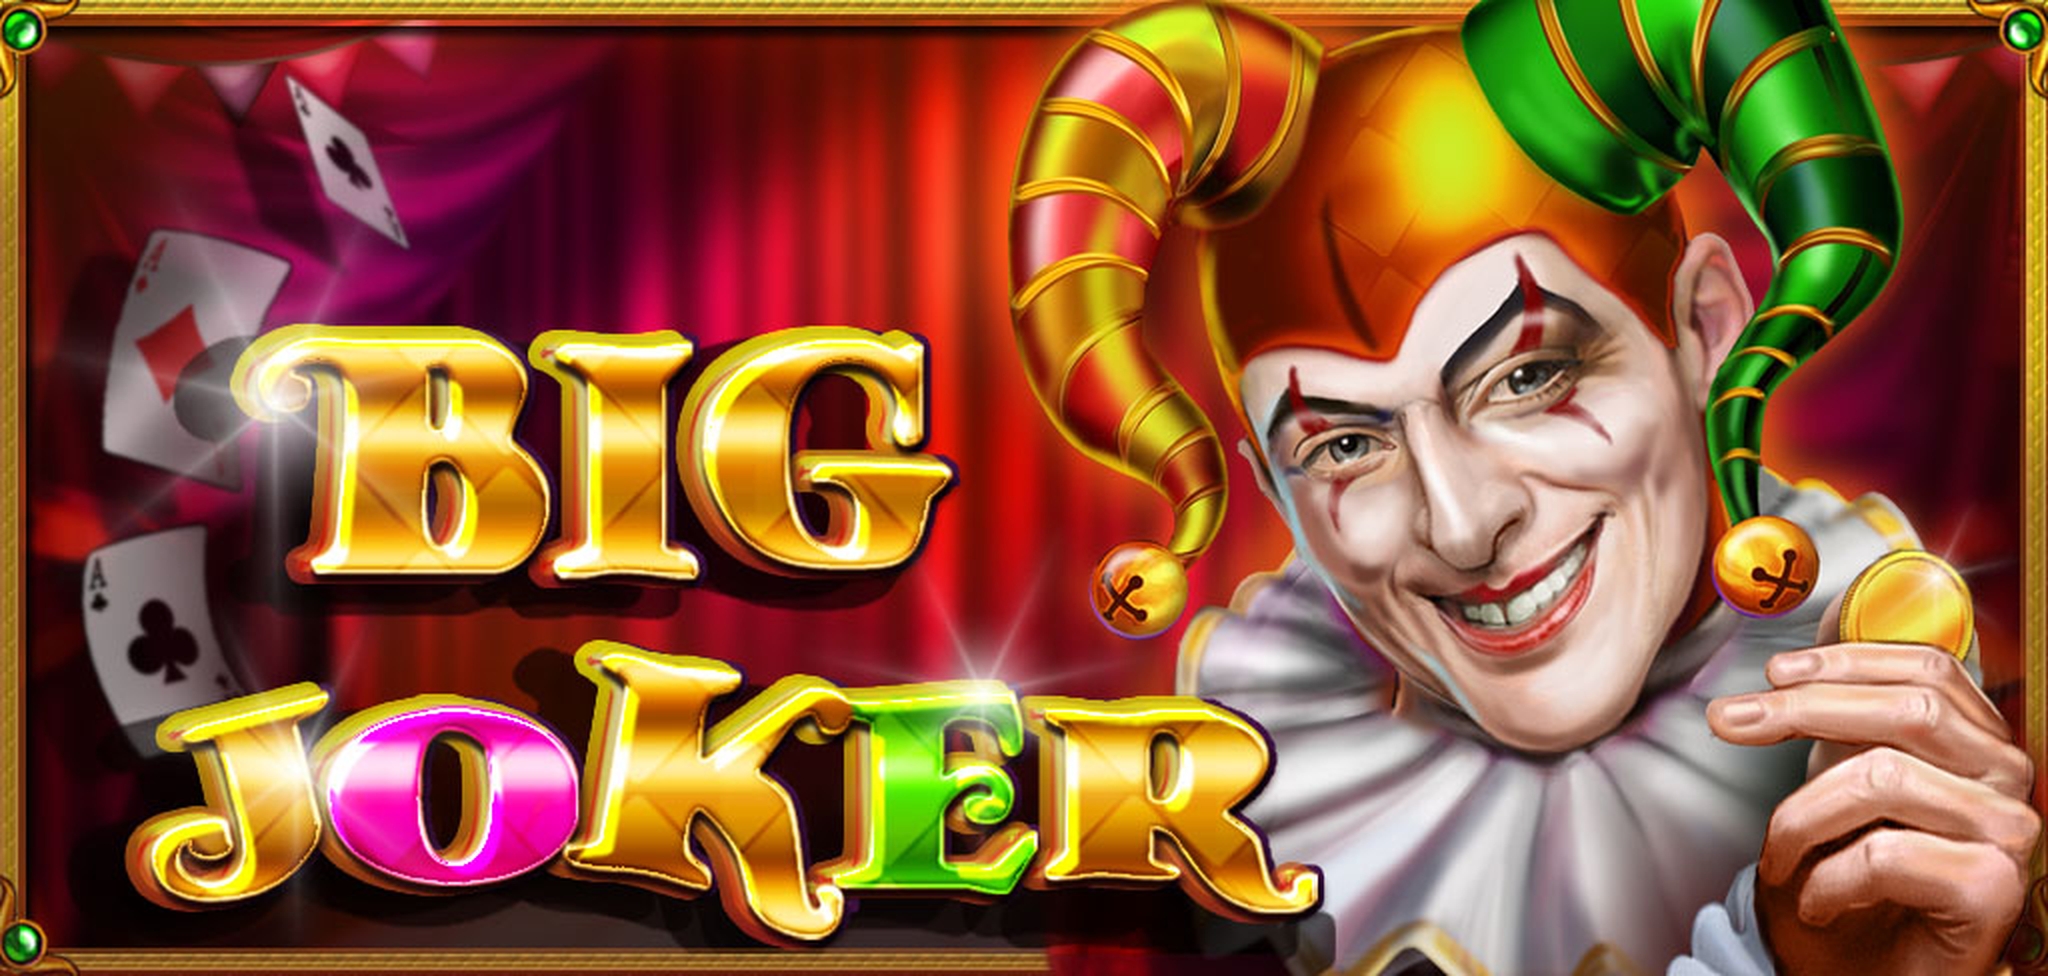 The Big Joker Online Slot Demo Game by casino technology